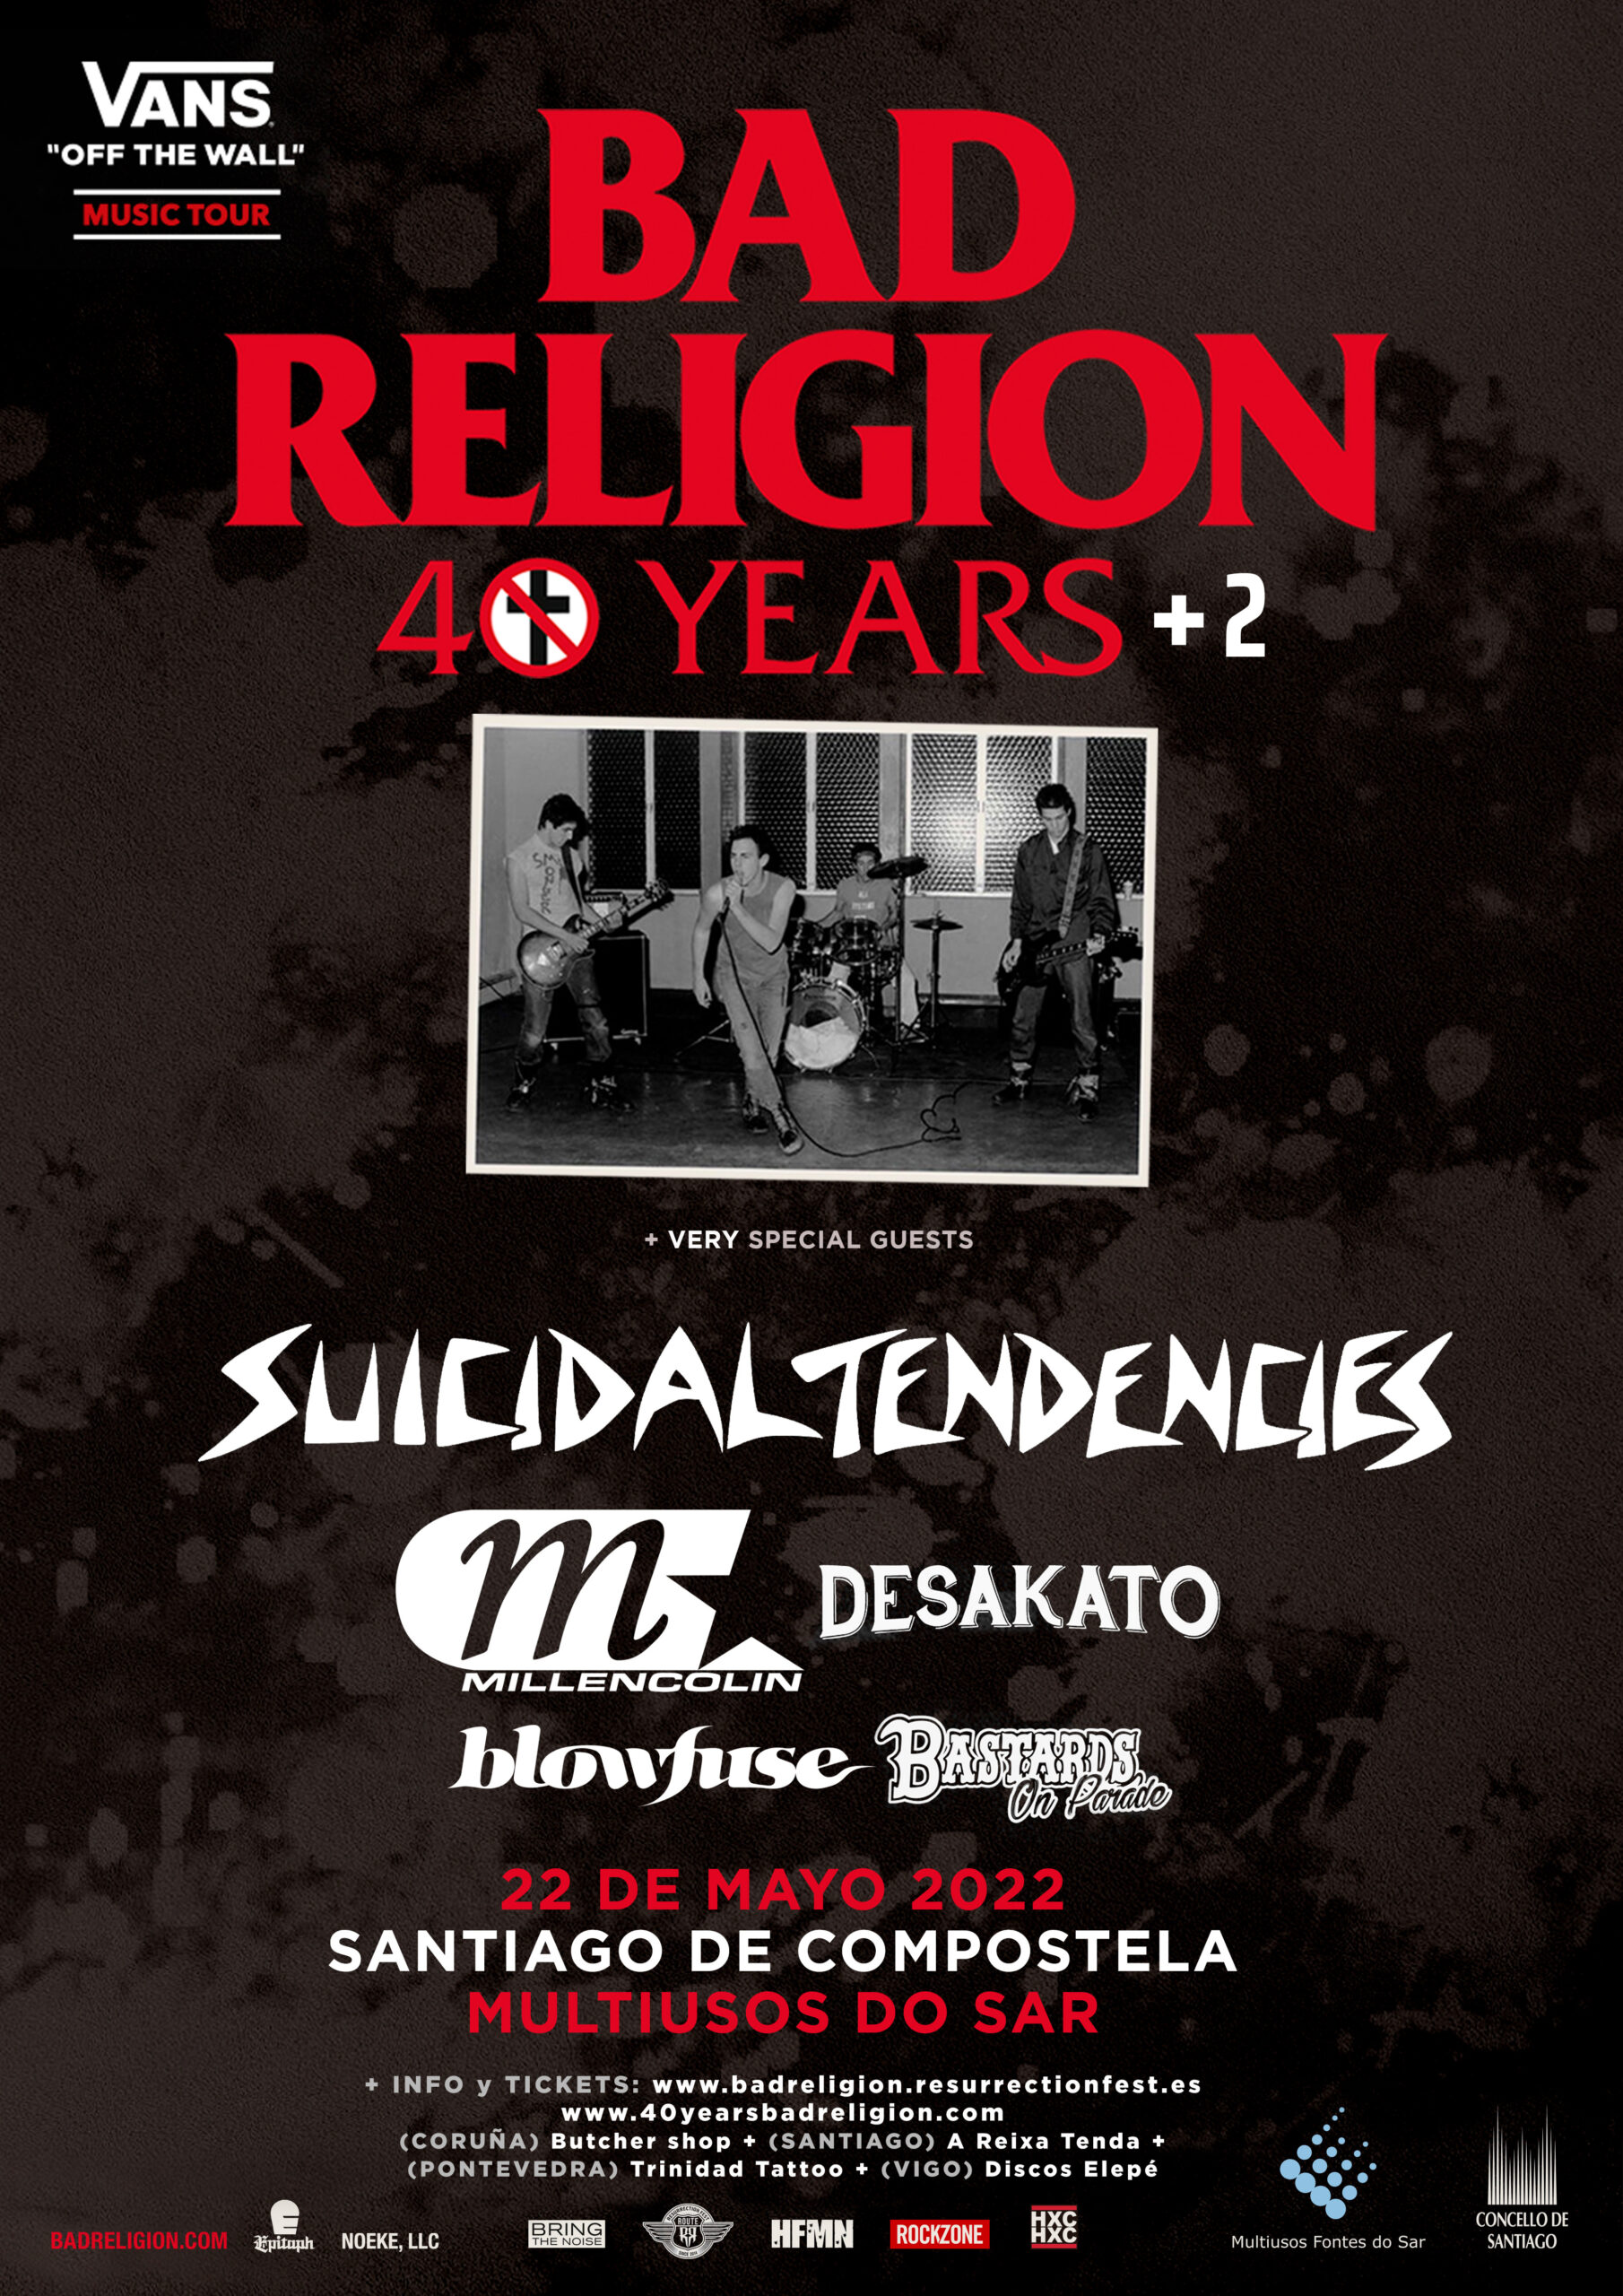 Route Resurrection 2022: Bad Religion – 40+2 Years (Santiago de Compostela)